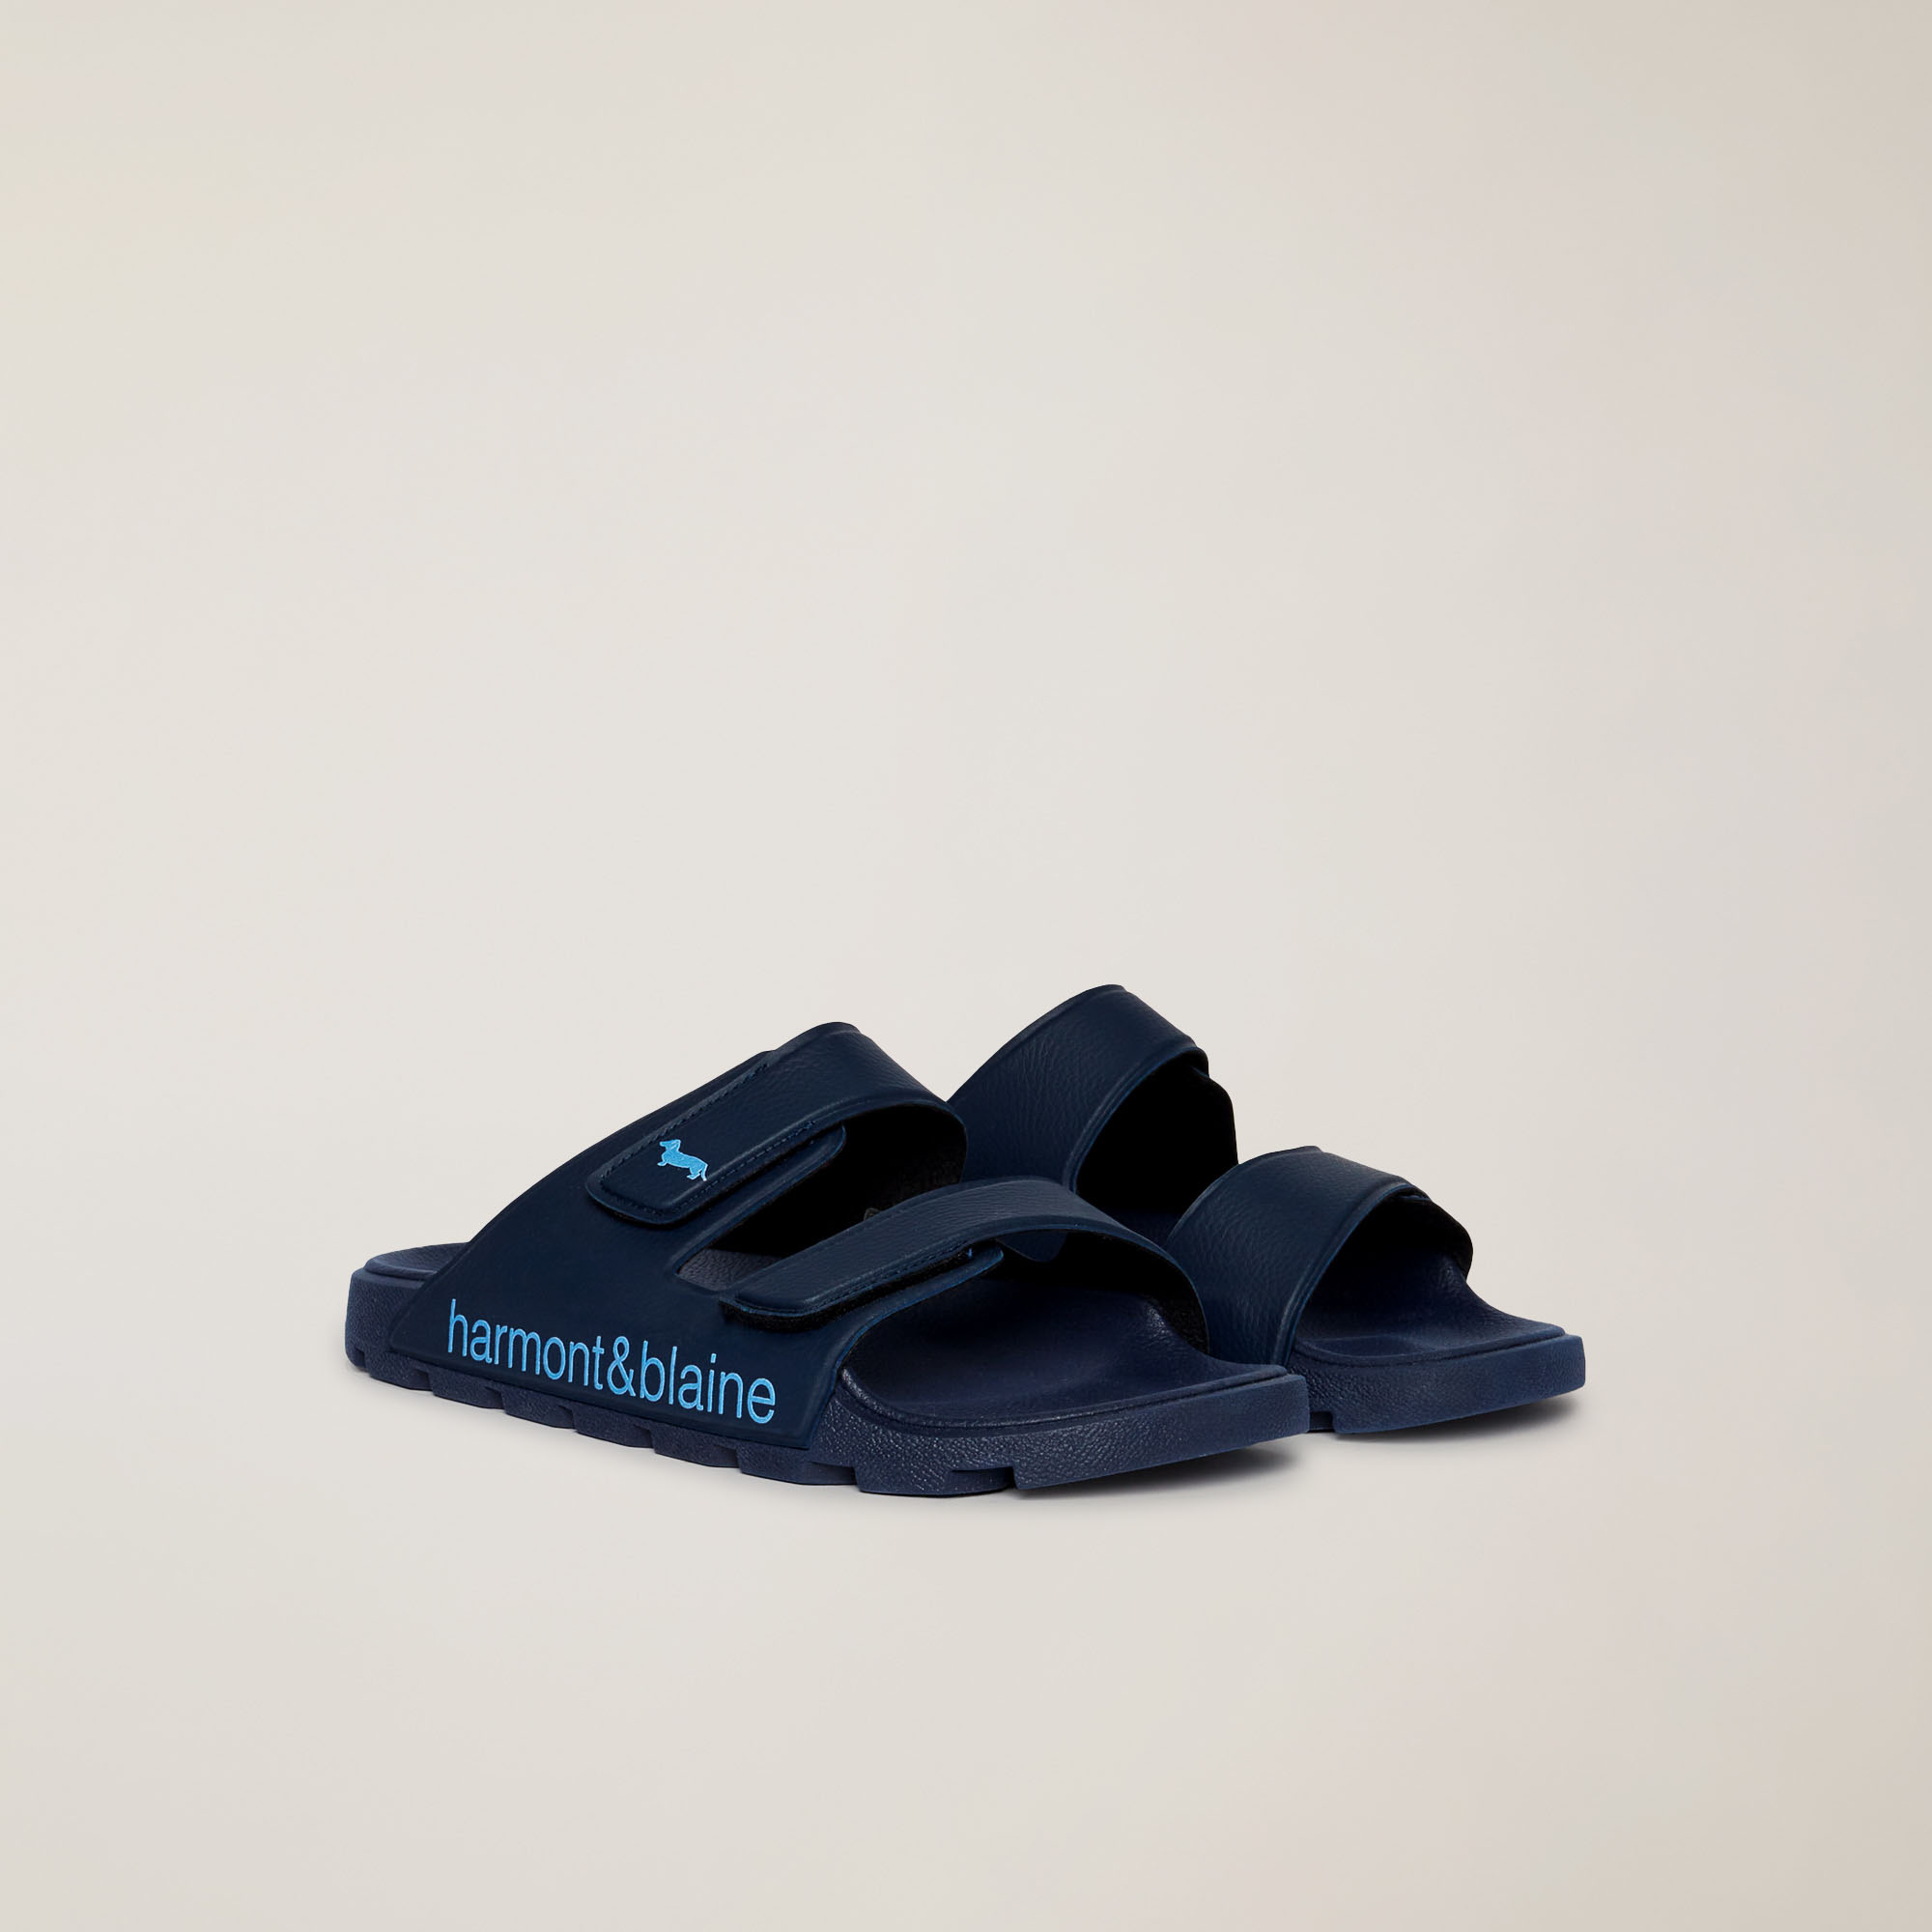 Sandale mit doppeltem Riemen, Blau, large image number 1